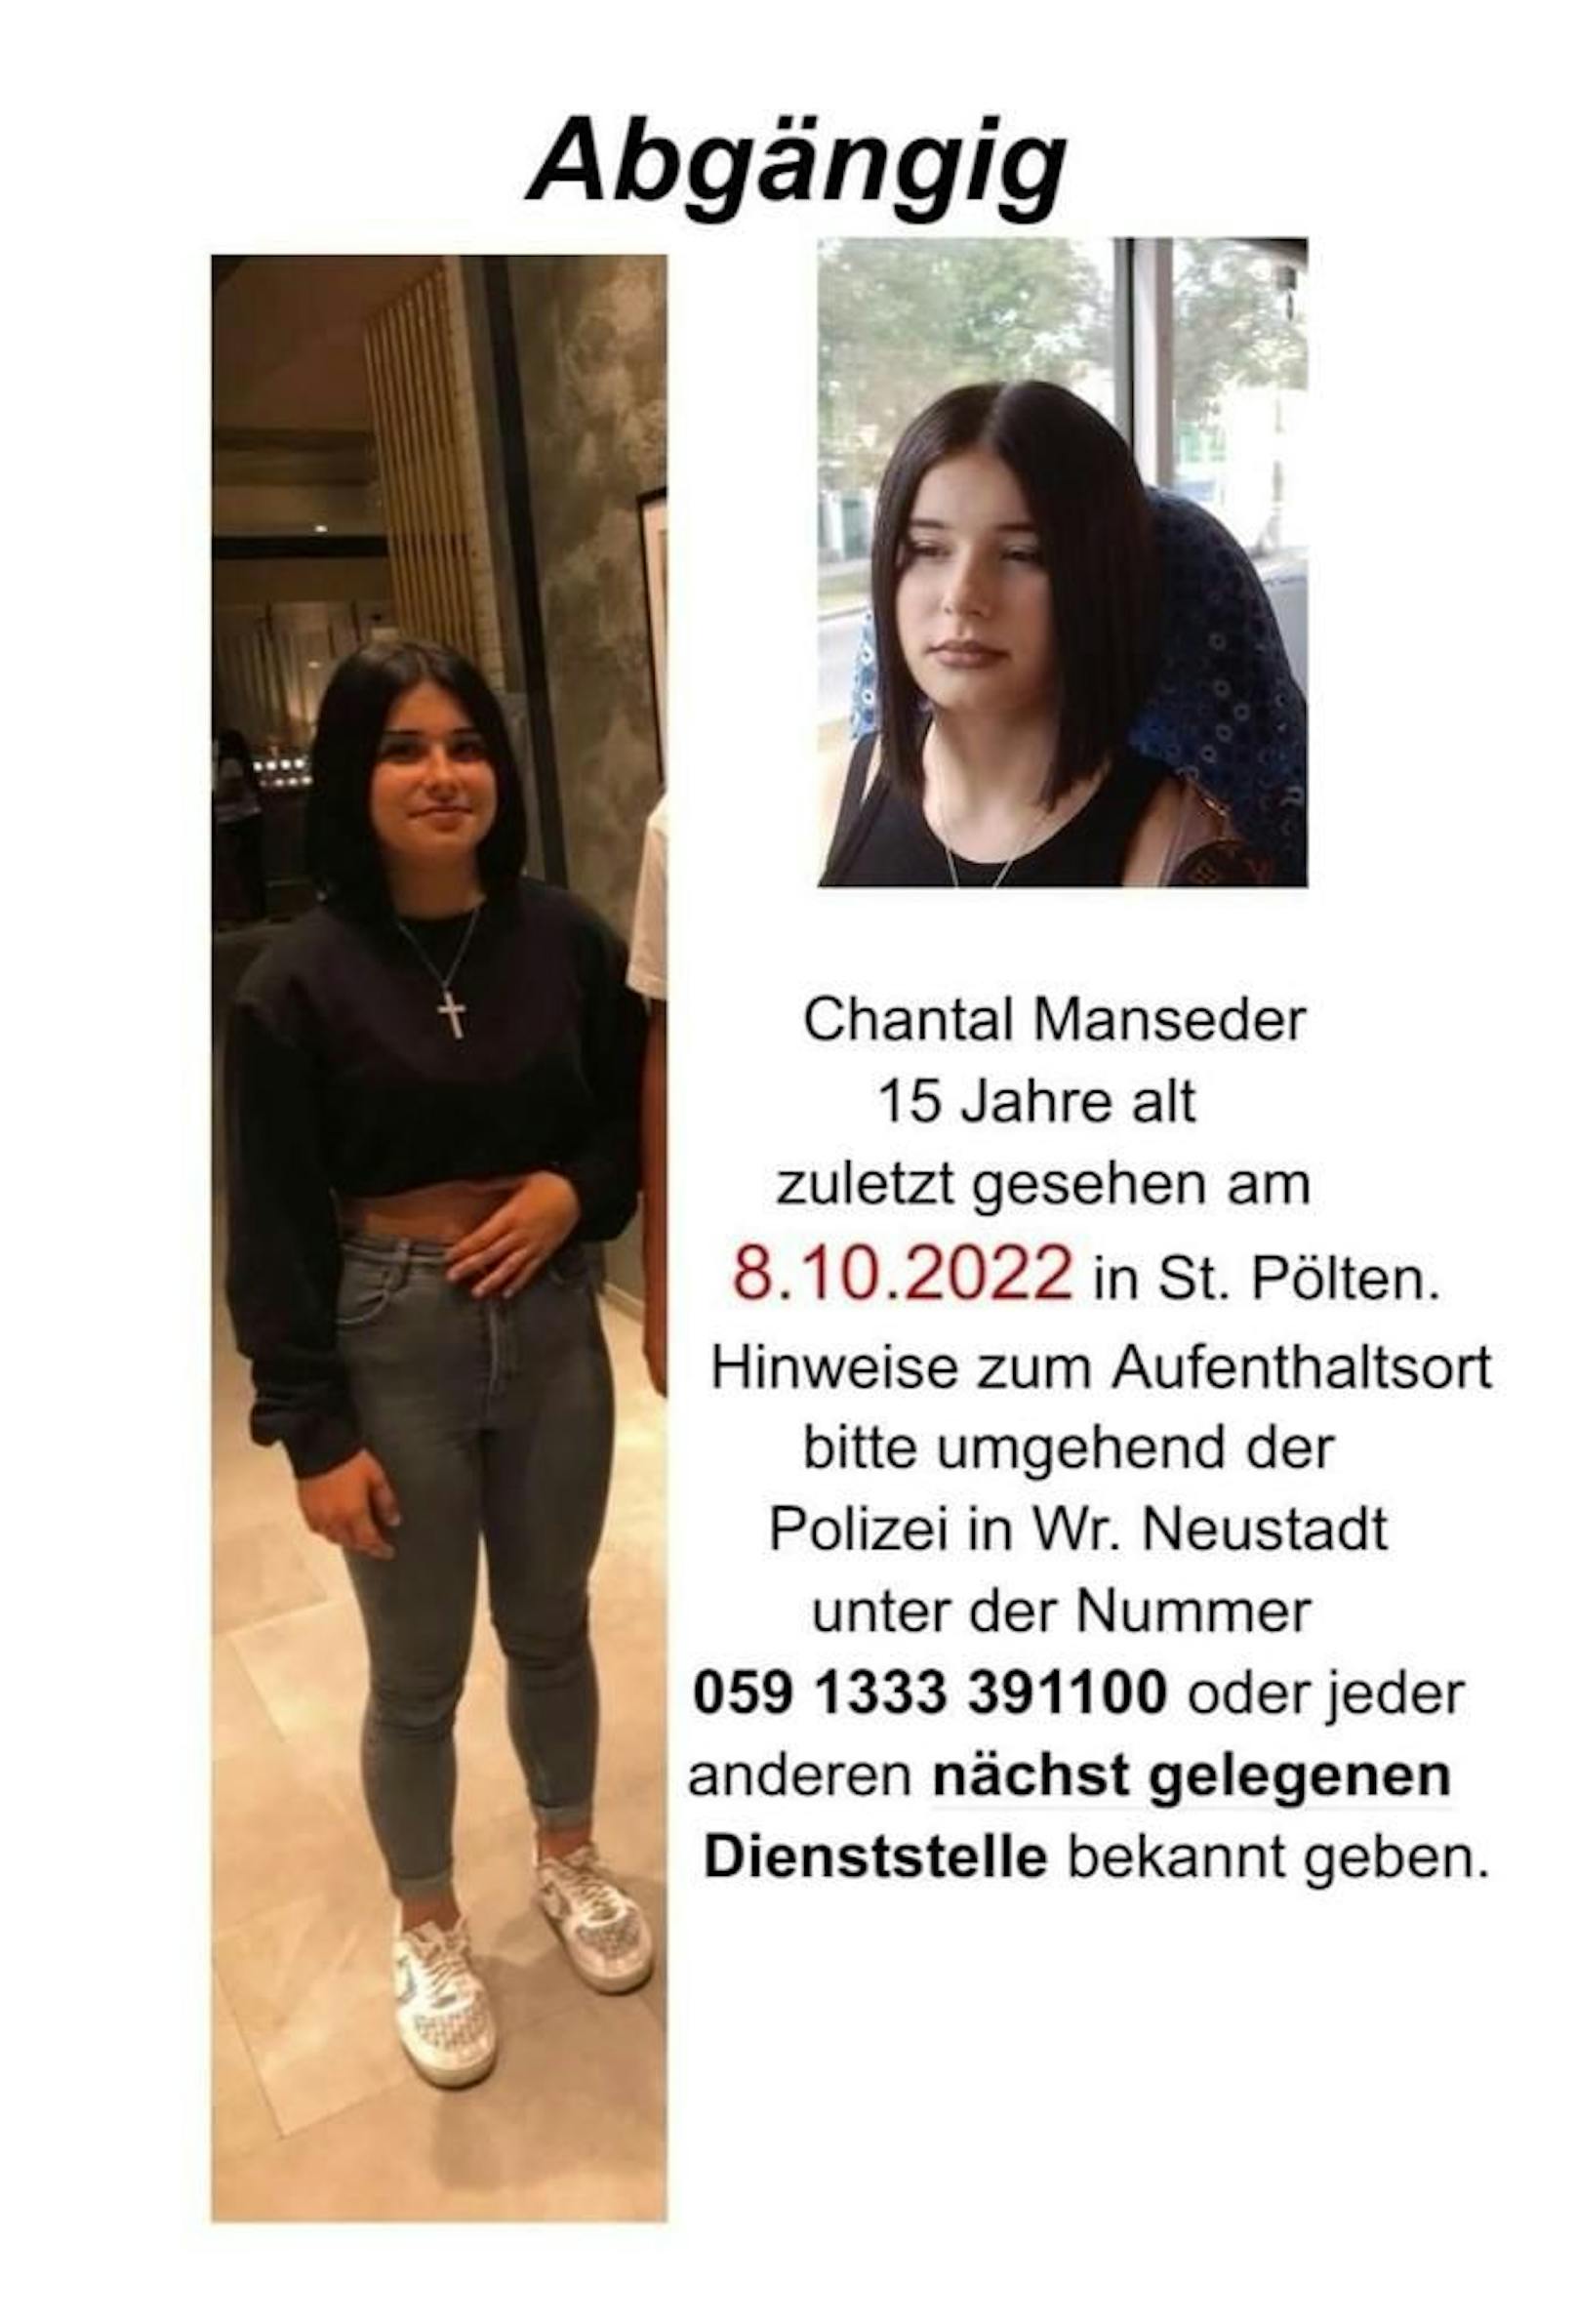 Chantal (15) vermisst